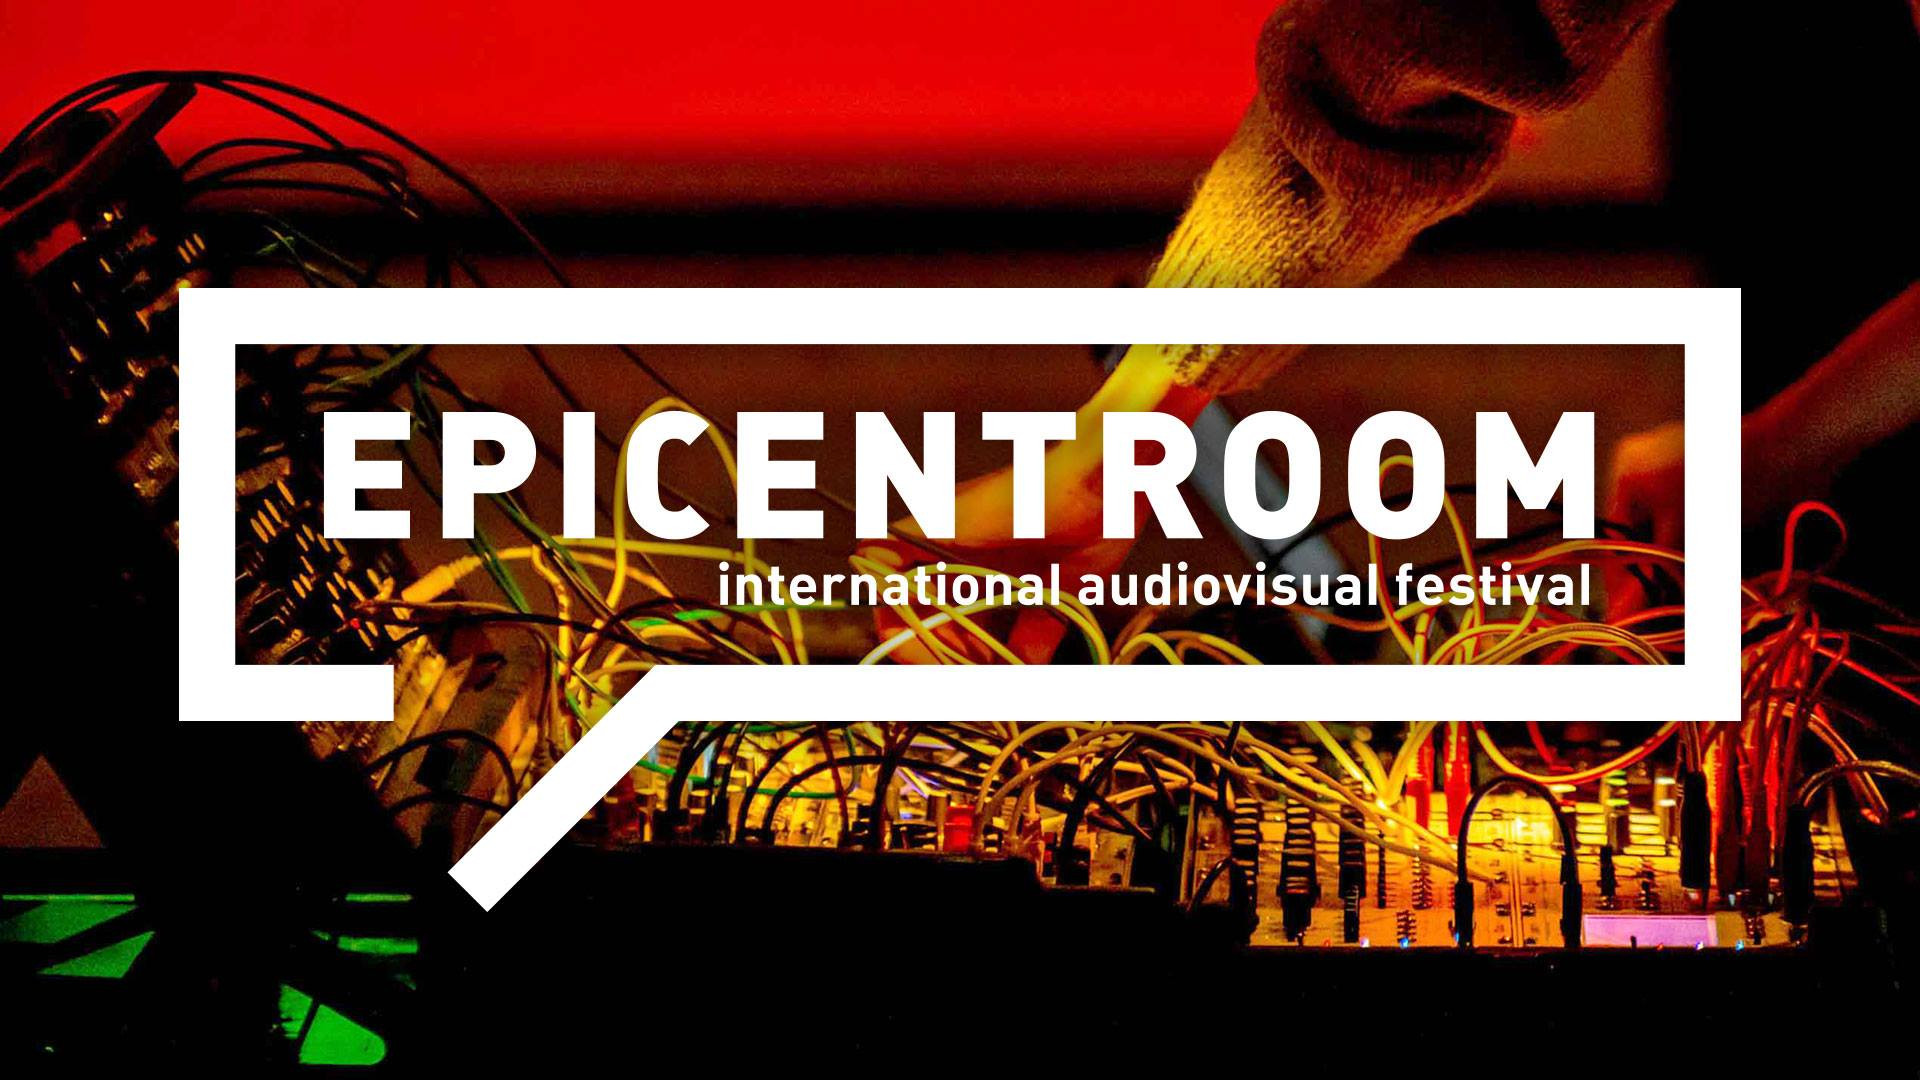 Epicentroom International Audiovisual Festival 2019